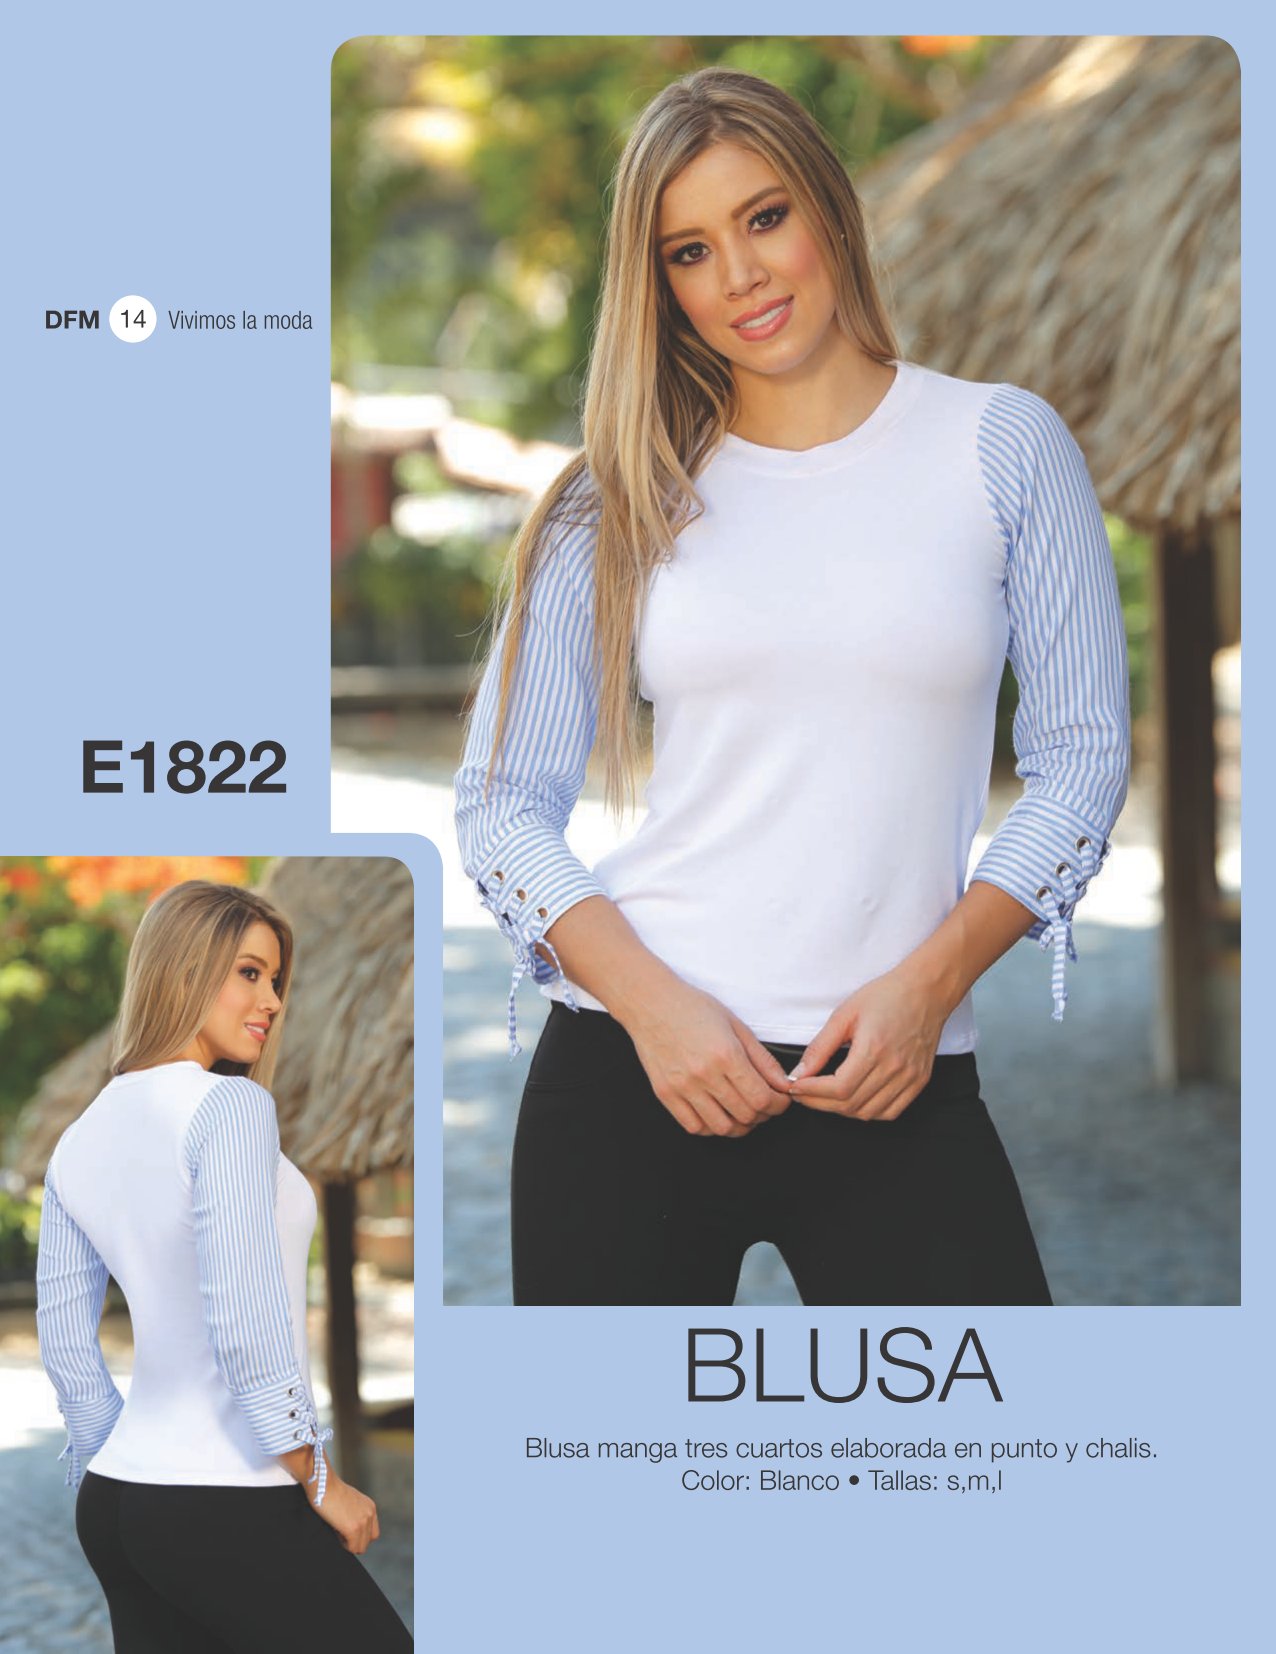 DFans on Twitter: "NUEVO CATALOGO E1822 - MANGA TRES CUARTOS ELABORADA EN Y CHALIS Color blanco Tallas S-M-L Síquenos en https://t.co/BGH2n2eclB #moda #jeans #blusas #catalogo #vestidos https://t.co/hC3ysy7ZJ4" / Twitter